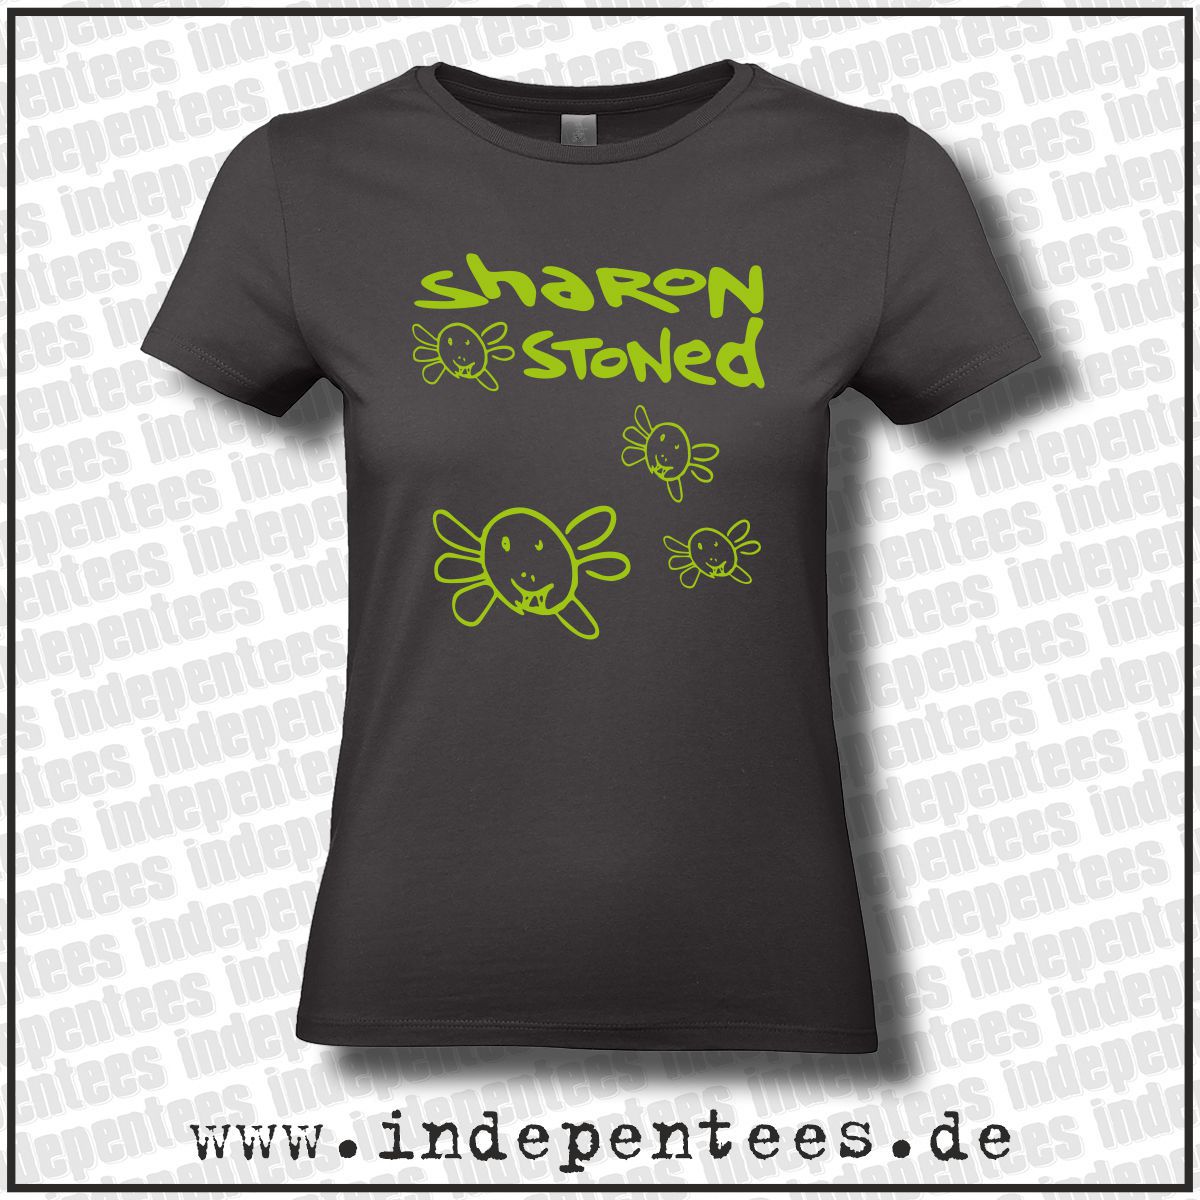 Sharon Stoned | License